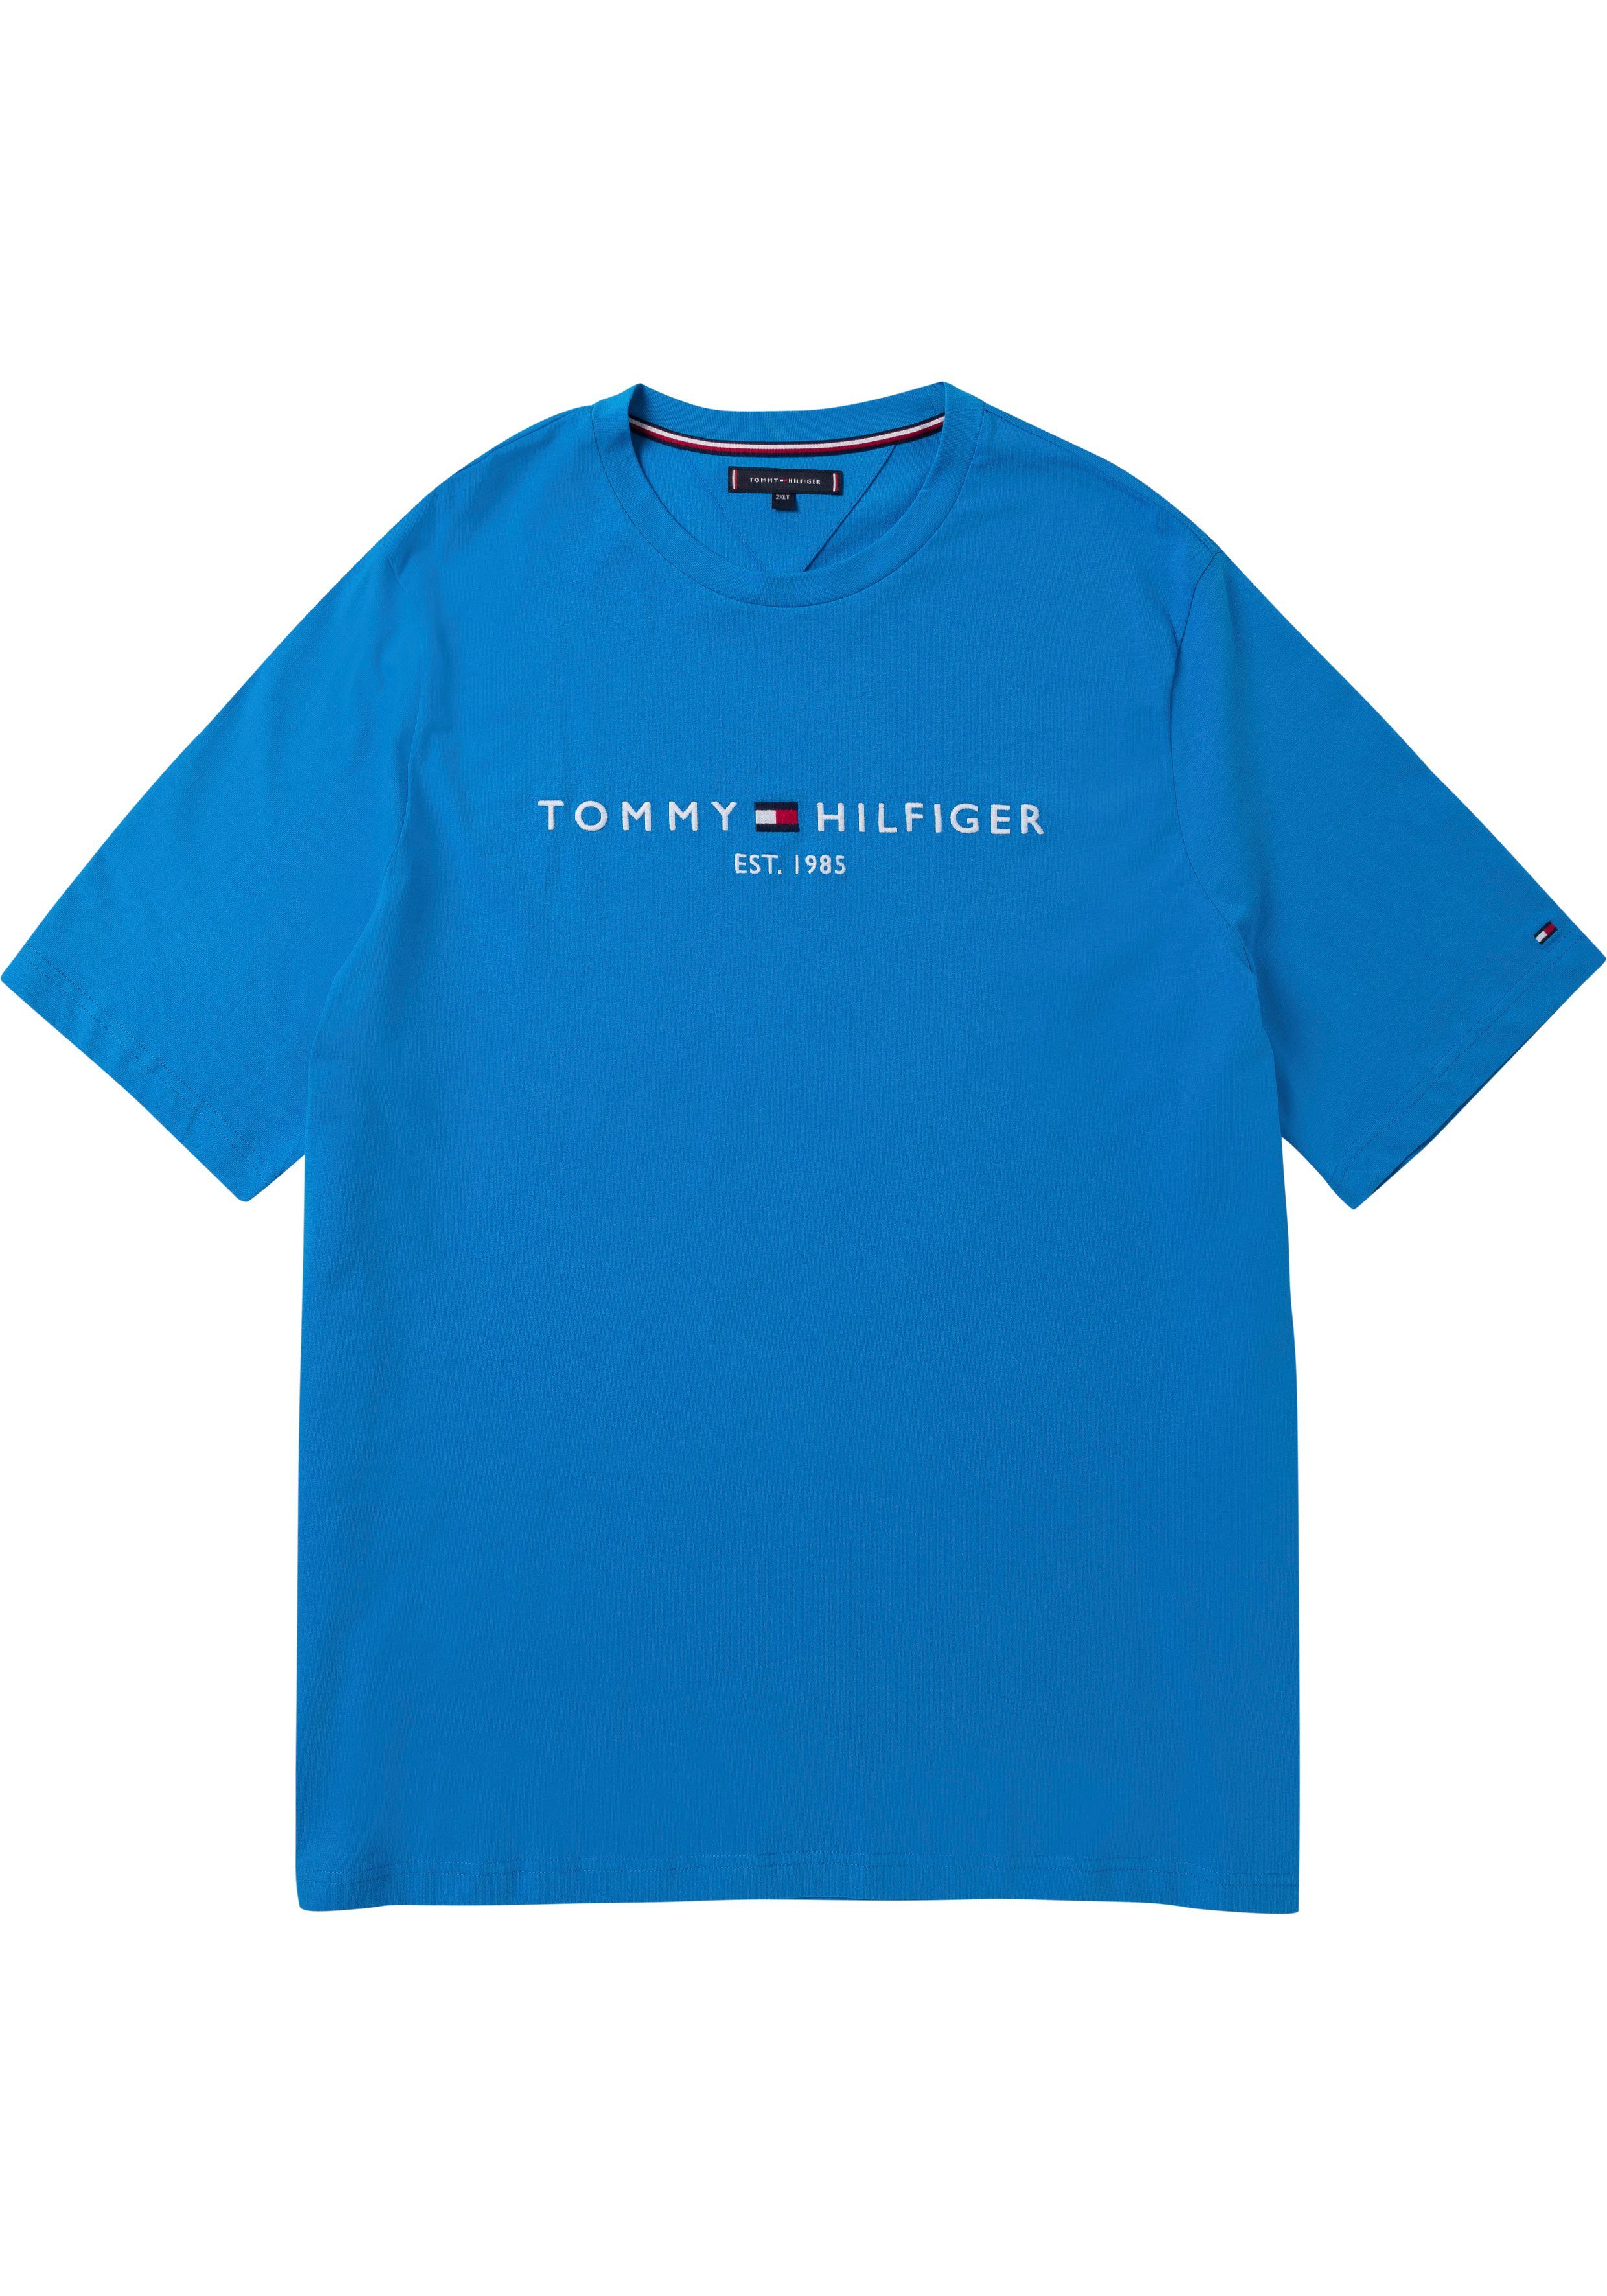 Tommy Hilfiger Brust auf & TEE-B BT-TOMMY Big mit Logoschriftzug Tall T-Shirt azurblau Hilfiger LOGO der Tommy